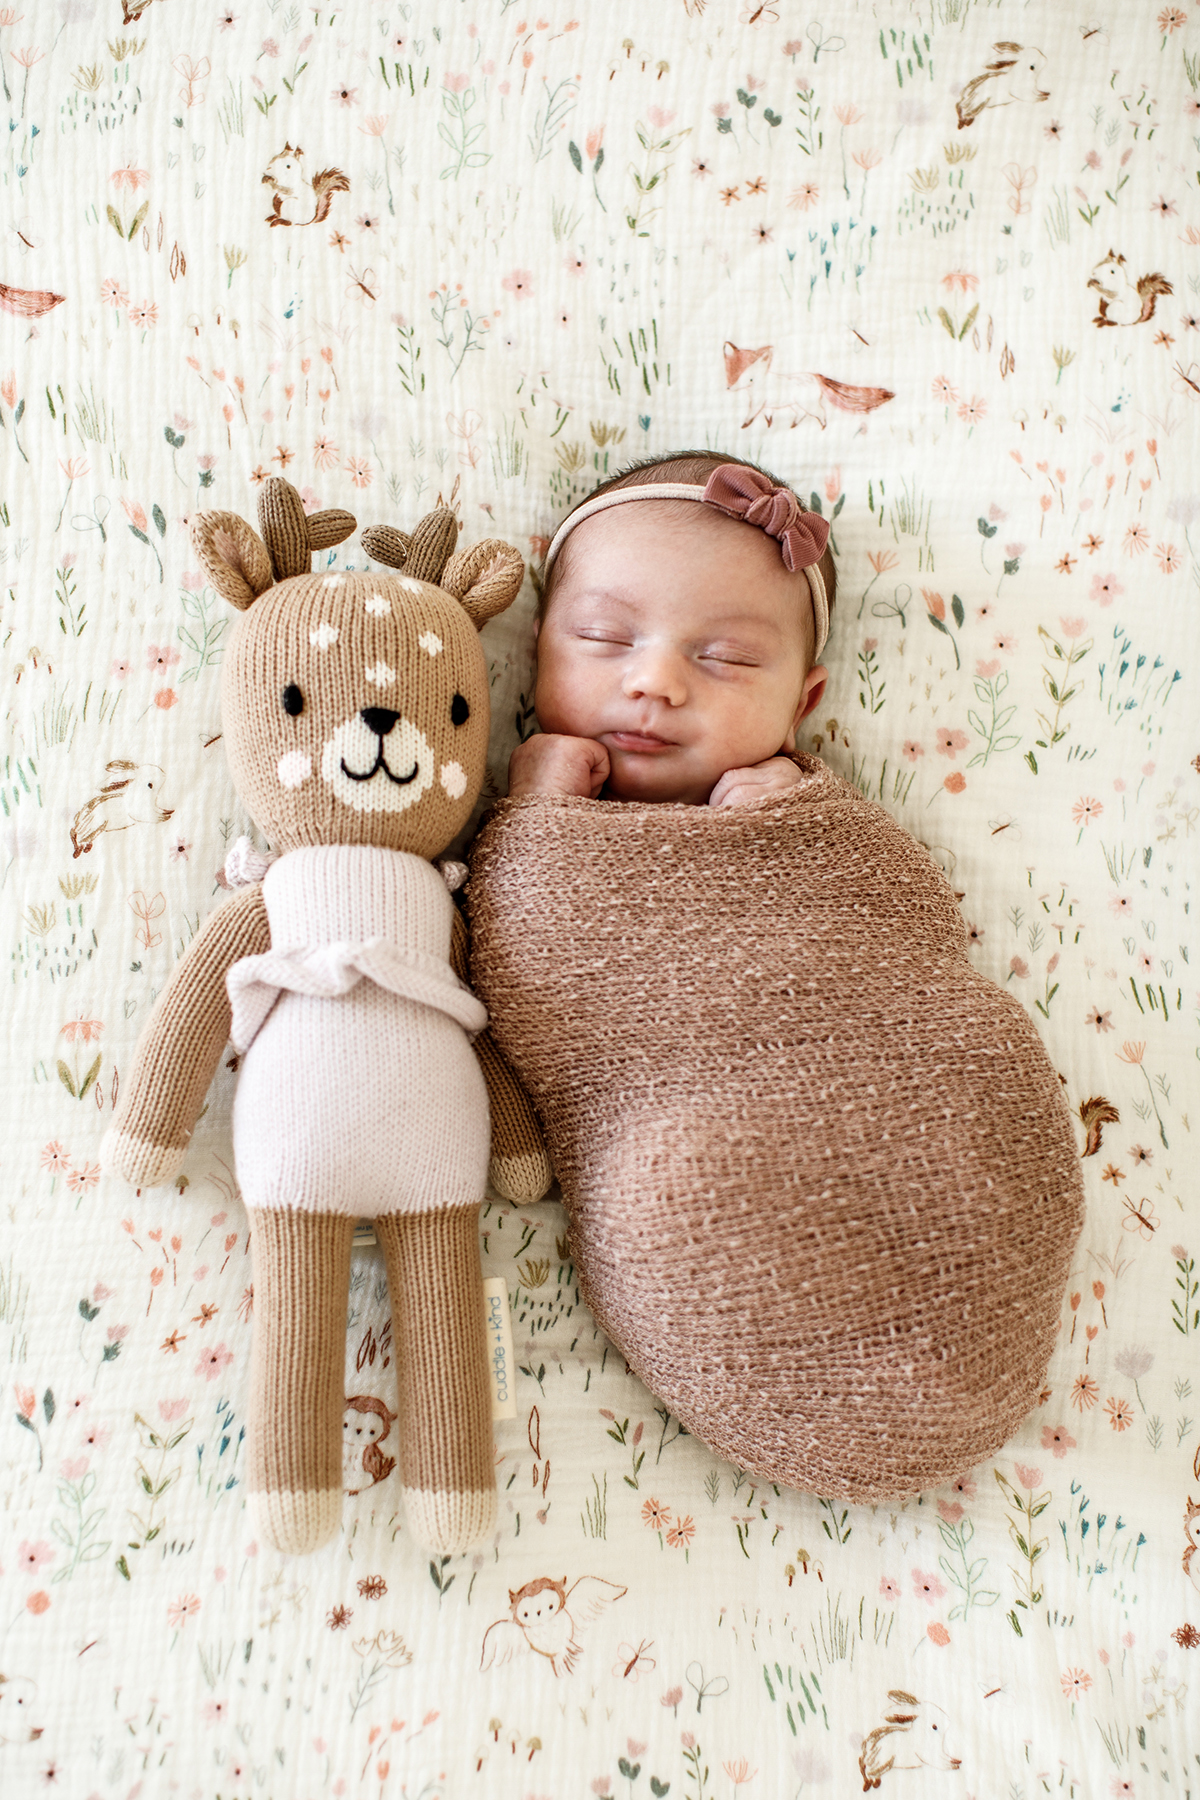 newborn baby girl sleeping with her stuff animal deer next to her